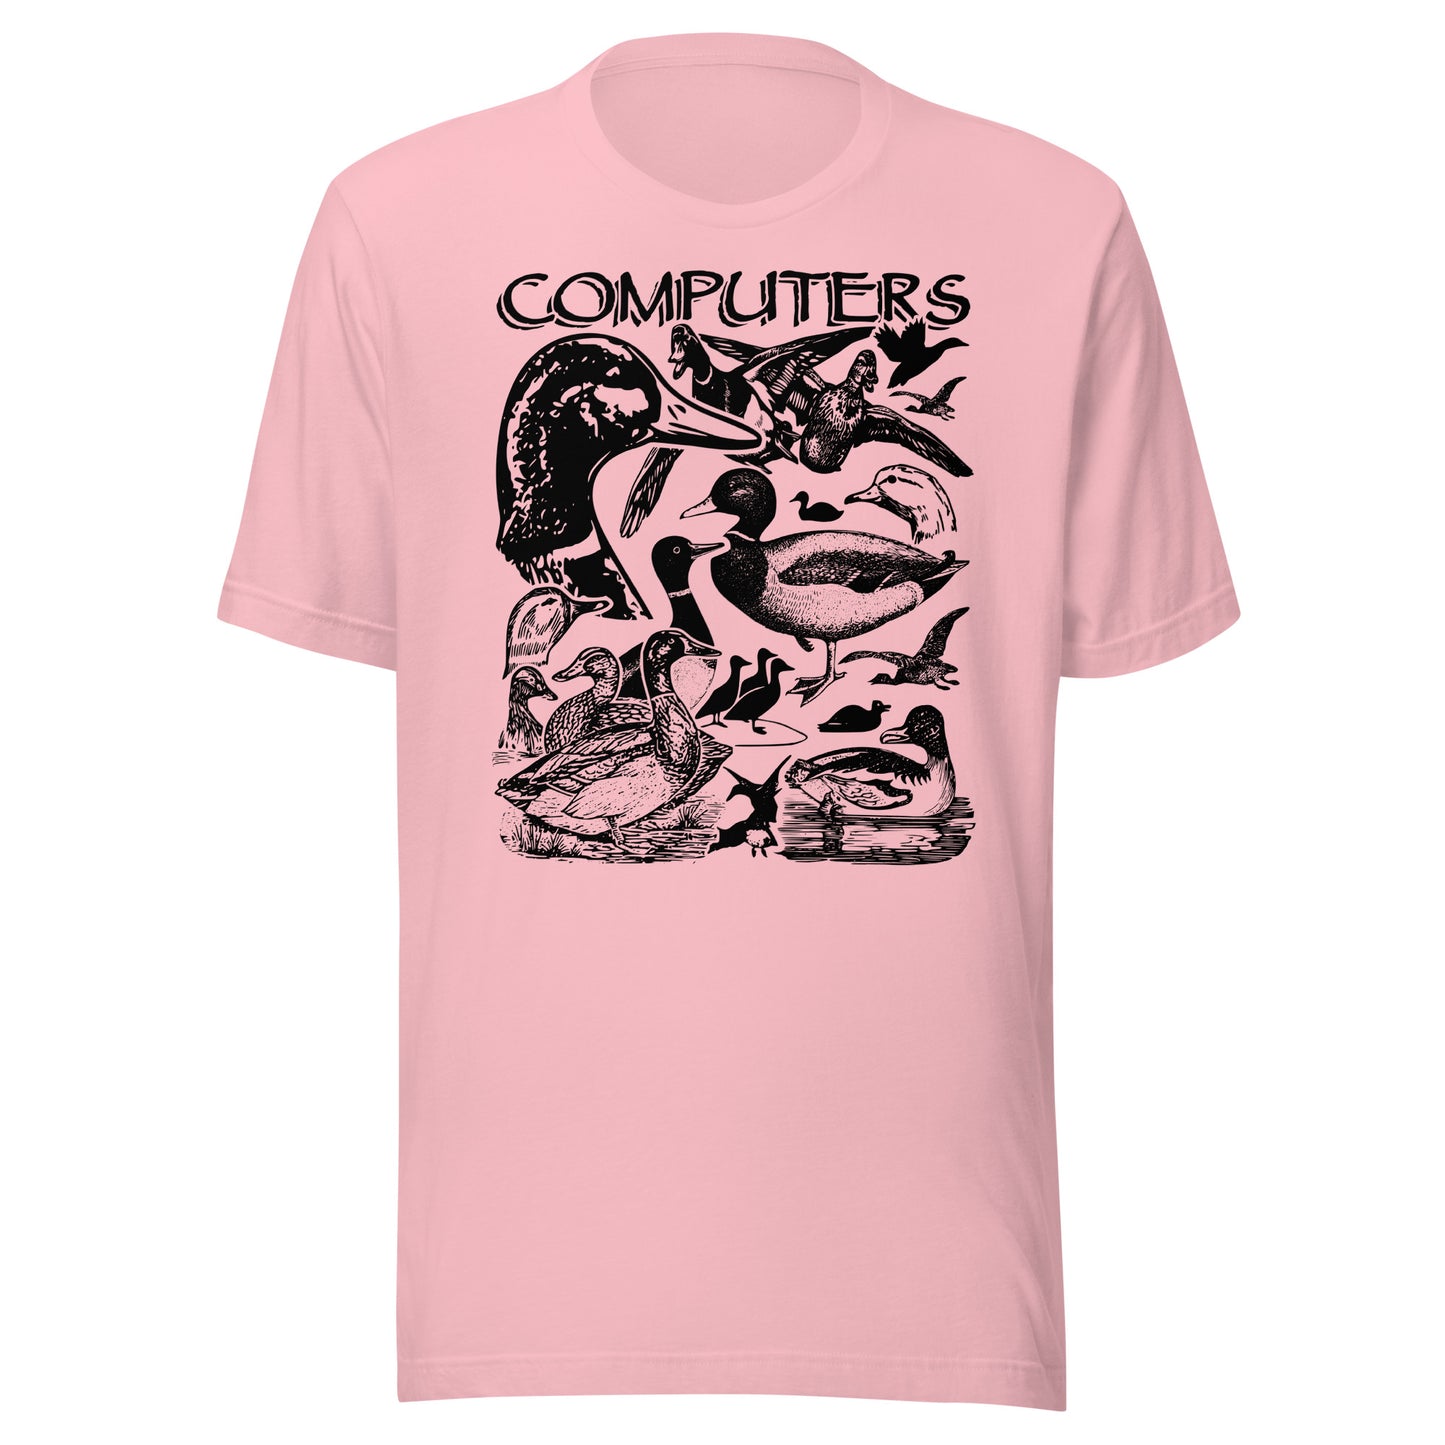 "Computers" Unisex t-shirt